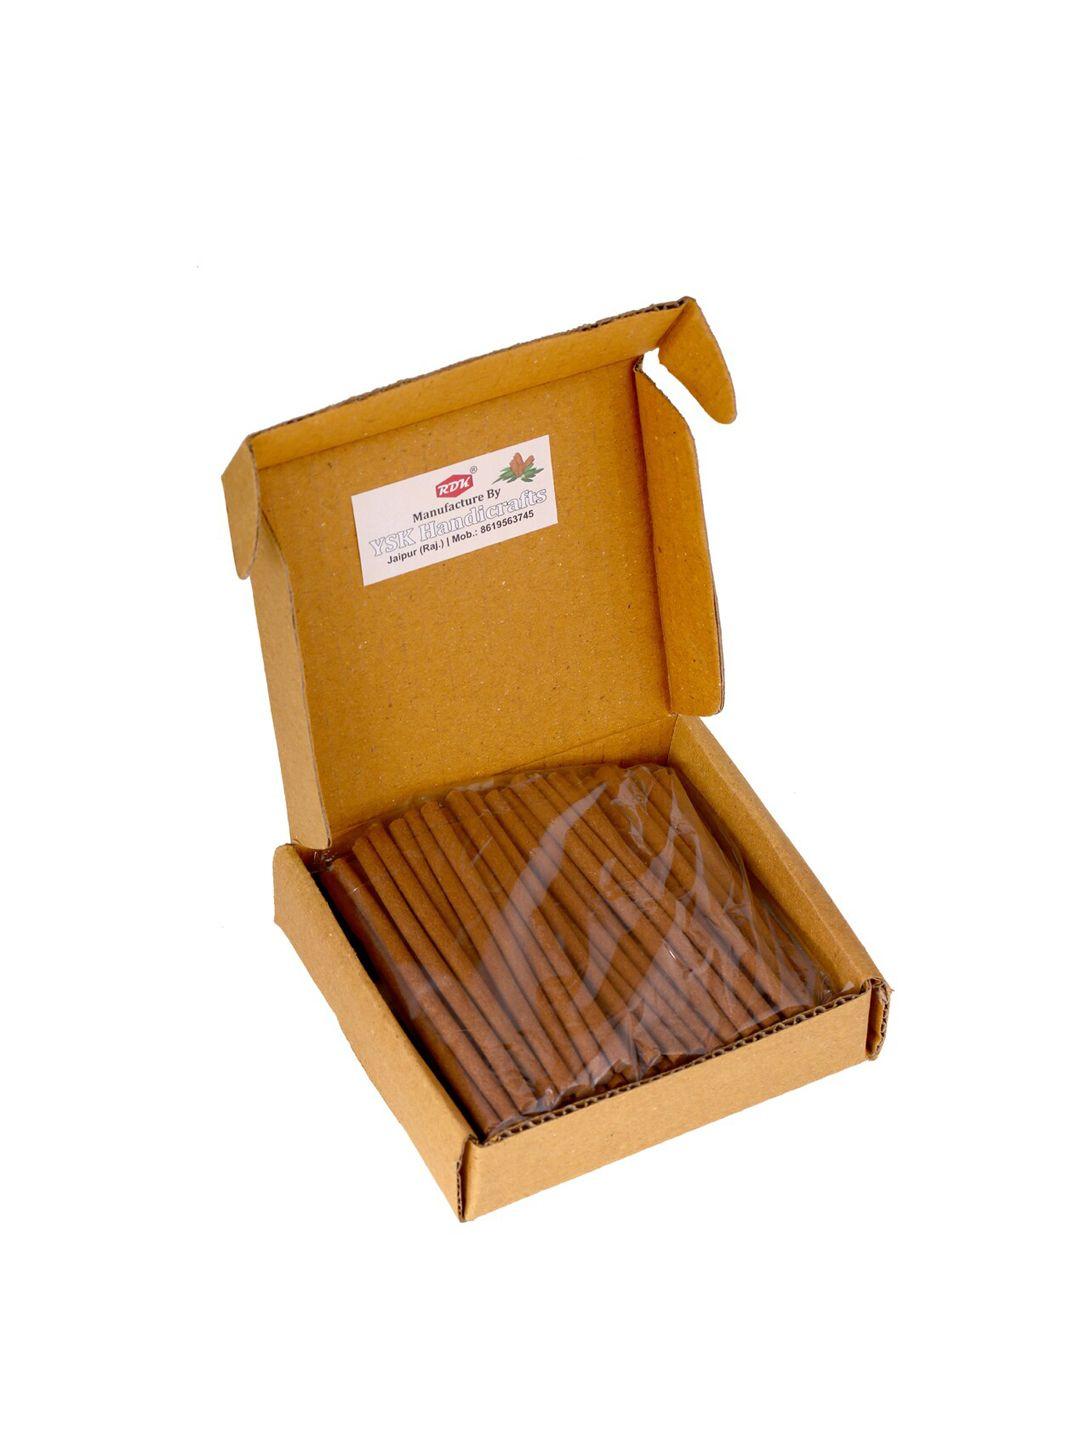 rdk sandalwood flavour charcoal free ayurvedic dhoop sticks with holder-200 gram